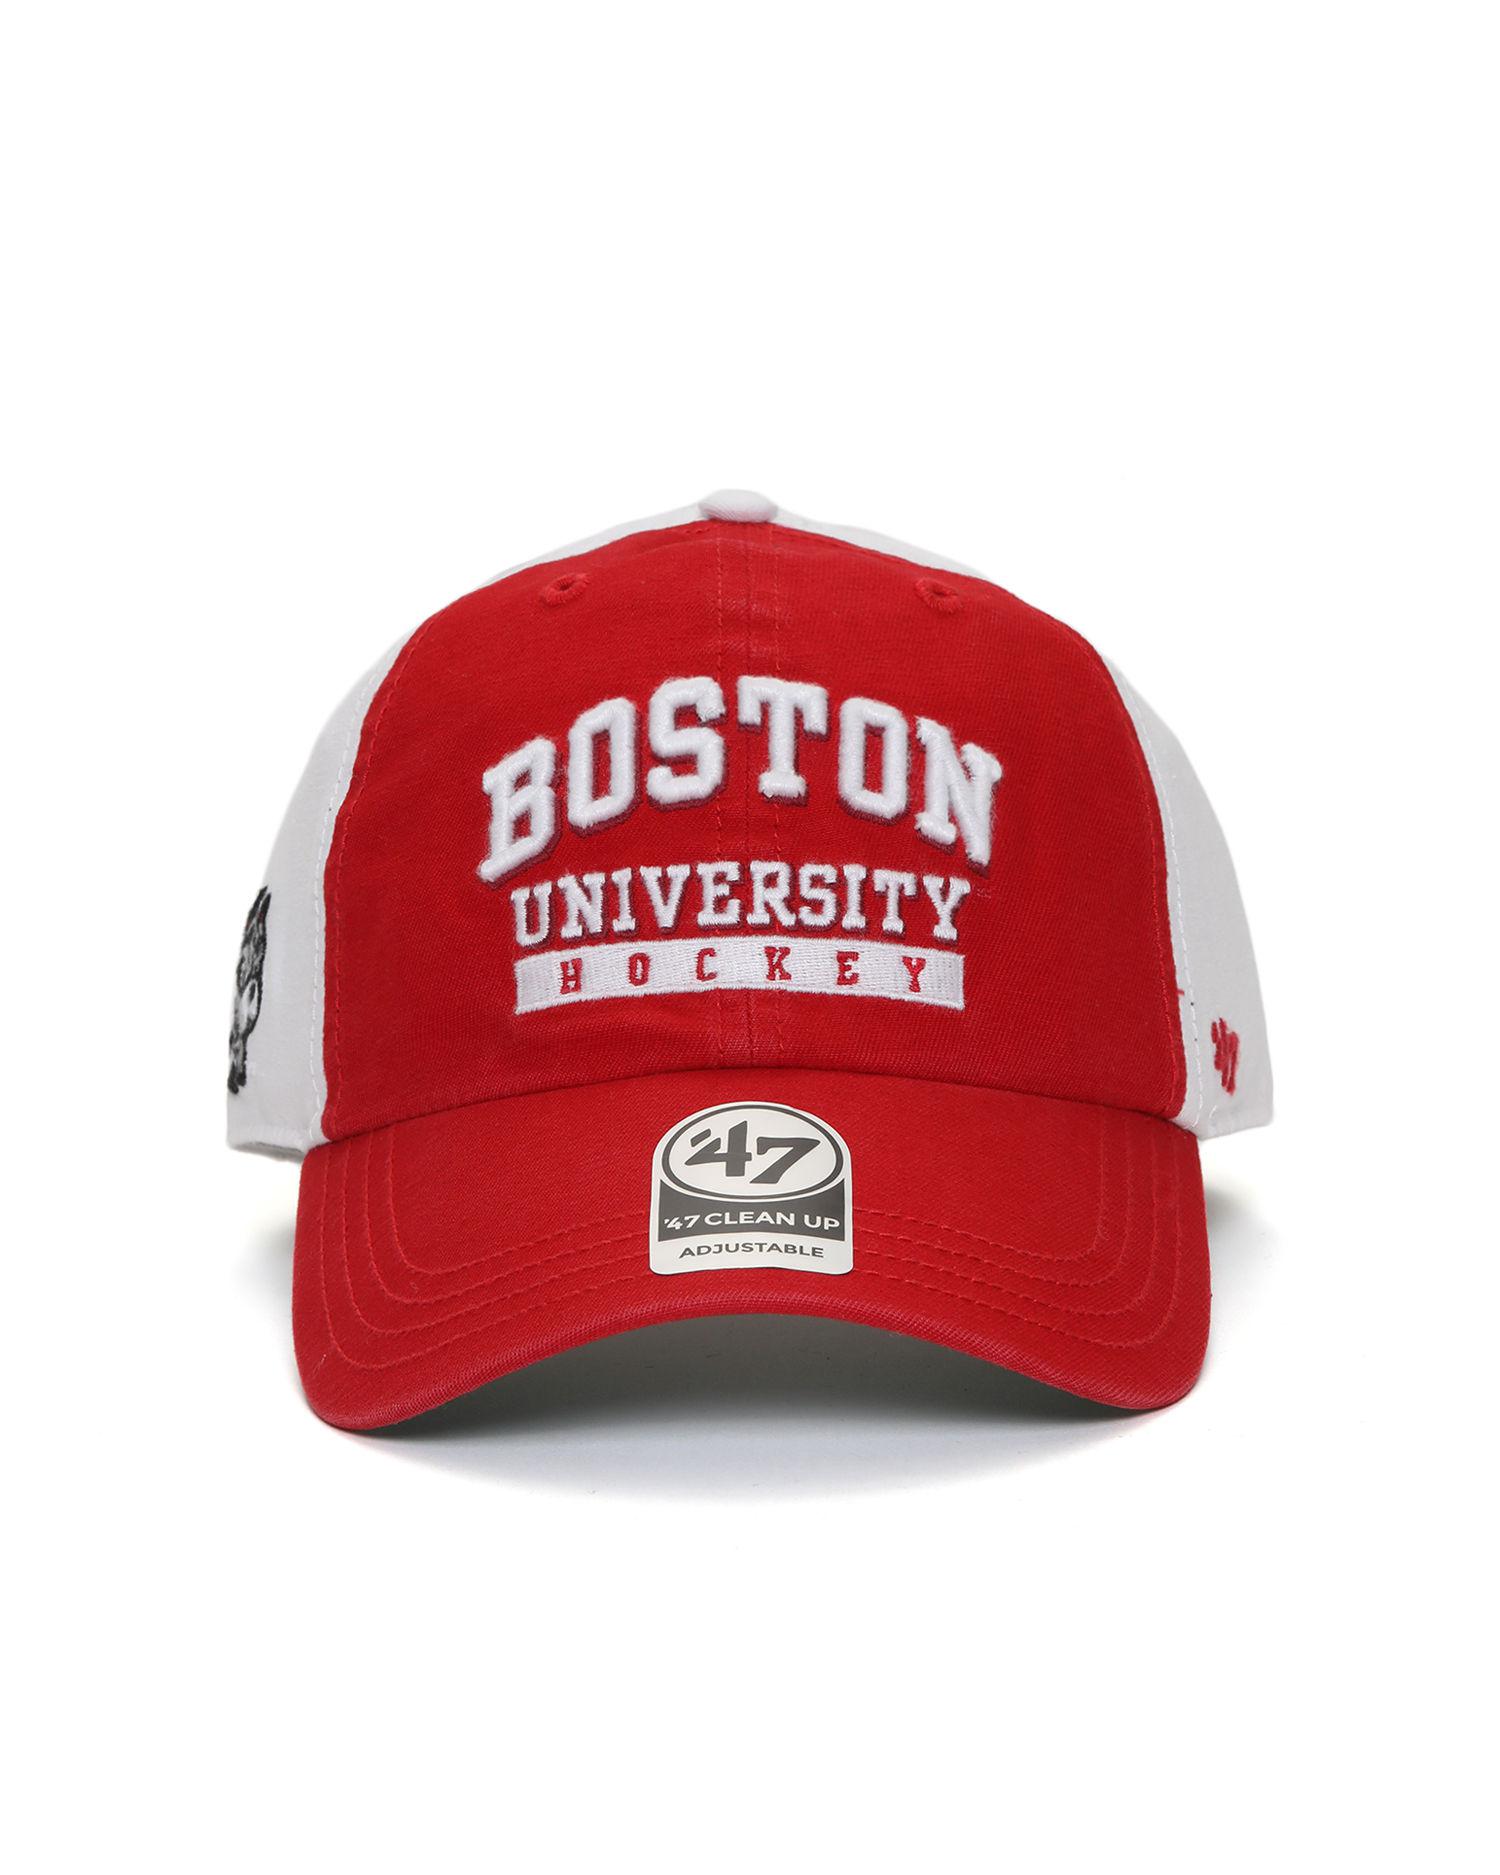 Boston University cap by '47